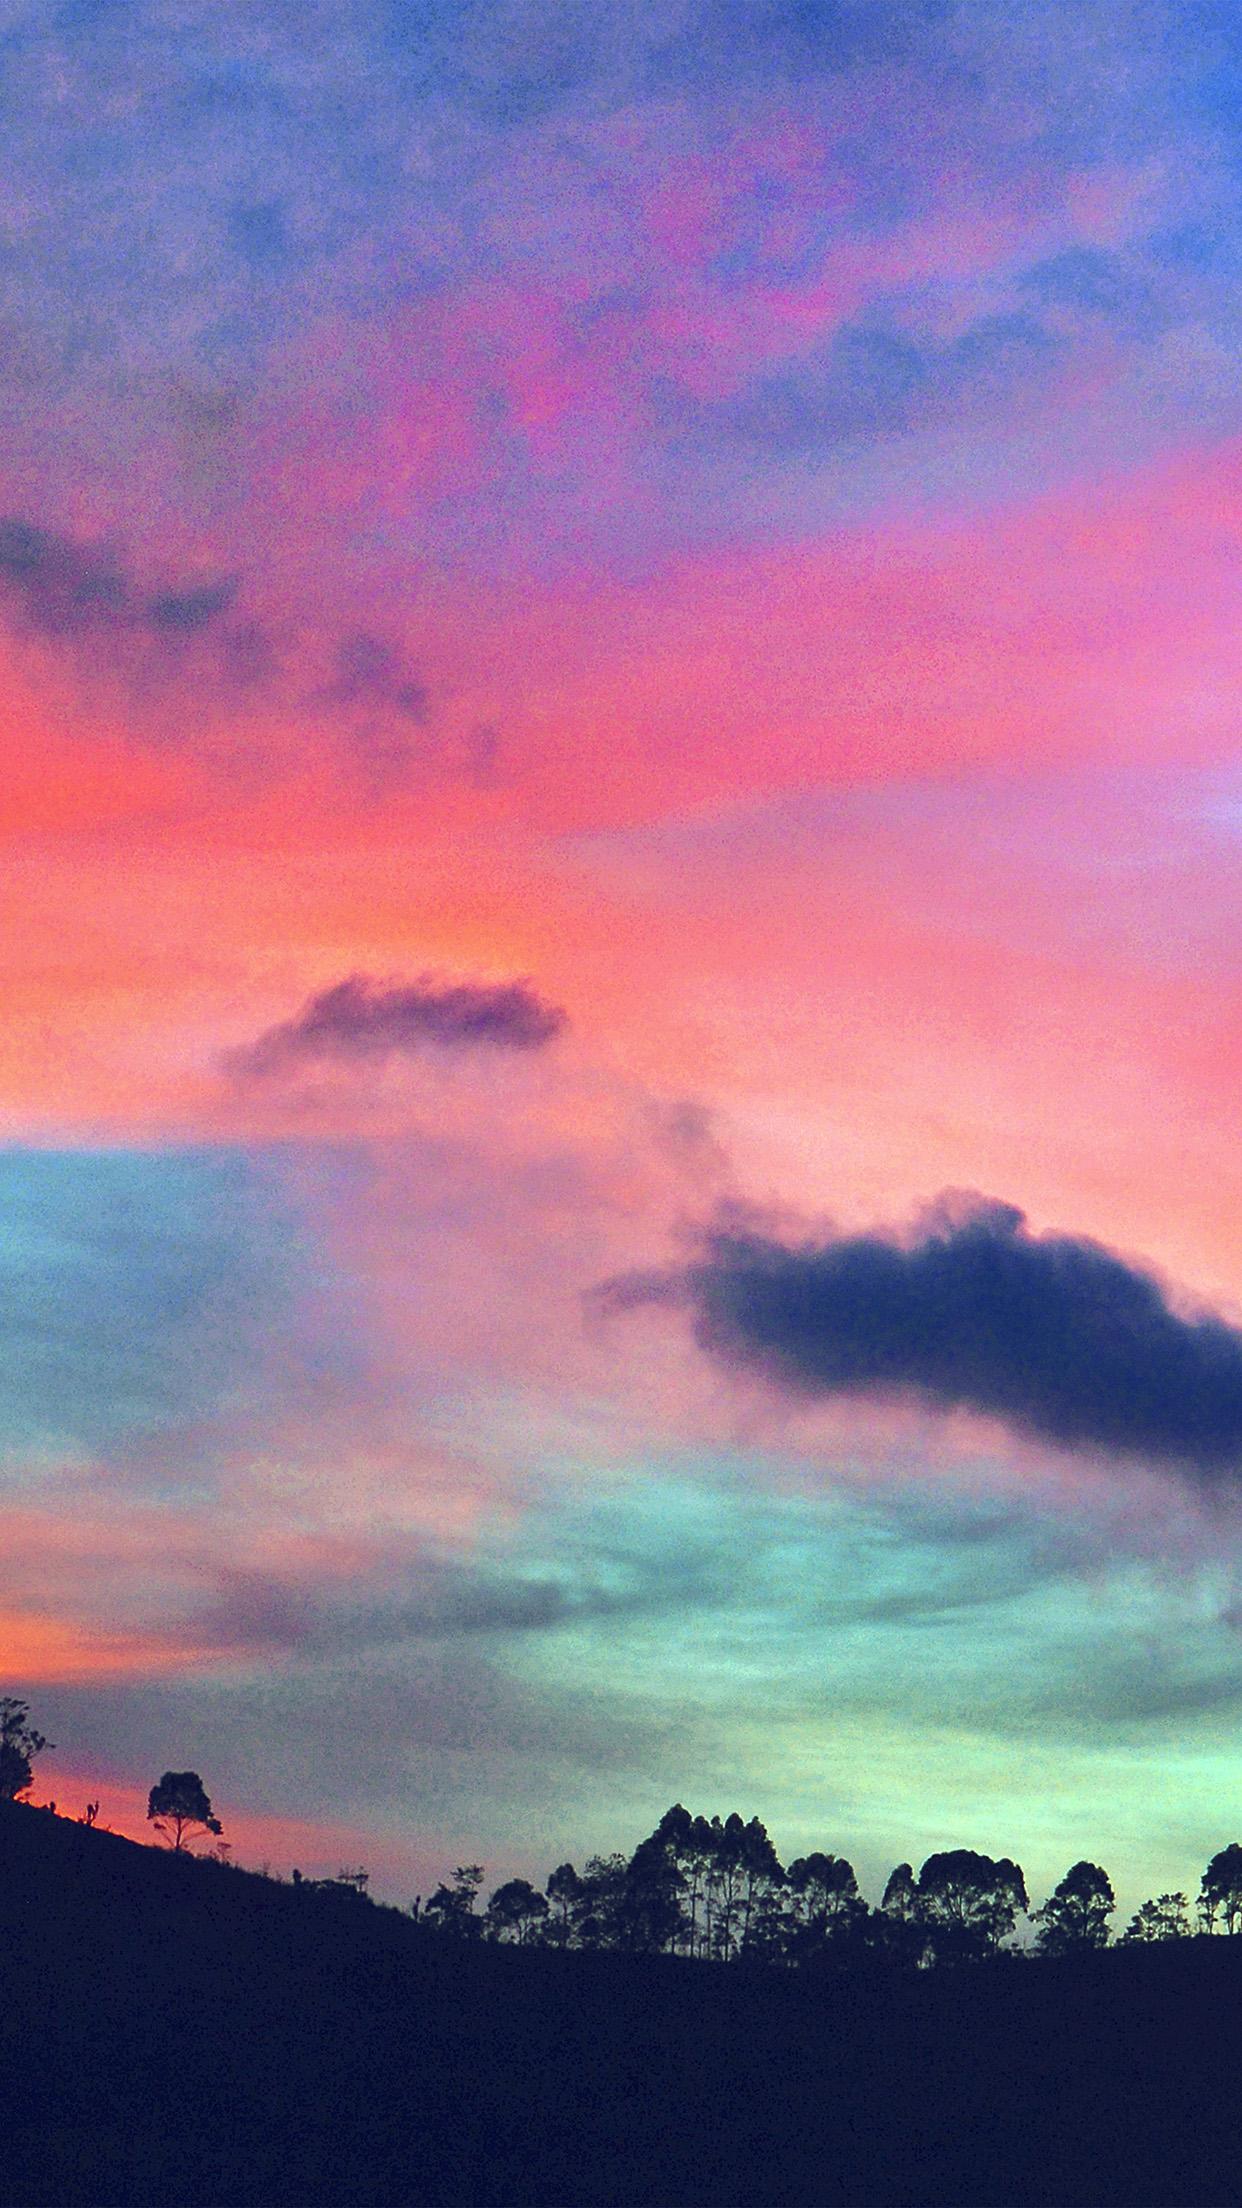 iPhone X wallpaper. sky rainbow cloud sunset nature blue pink